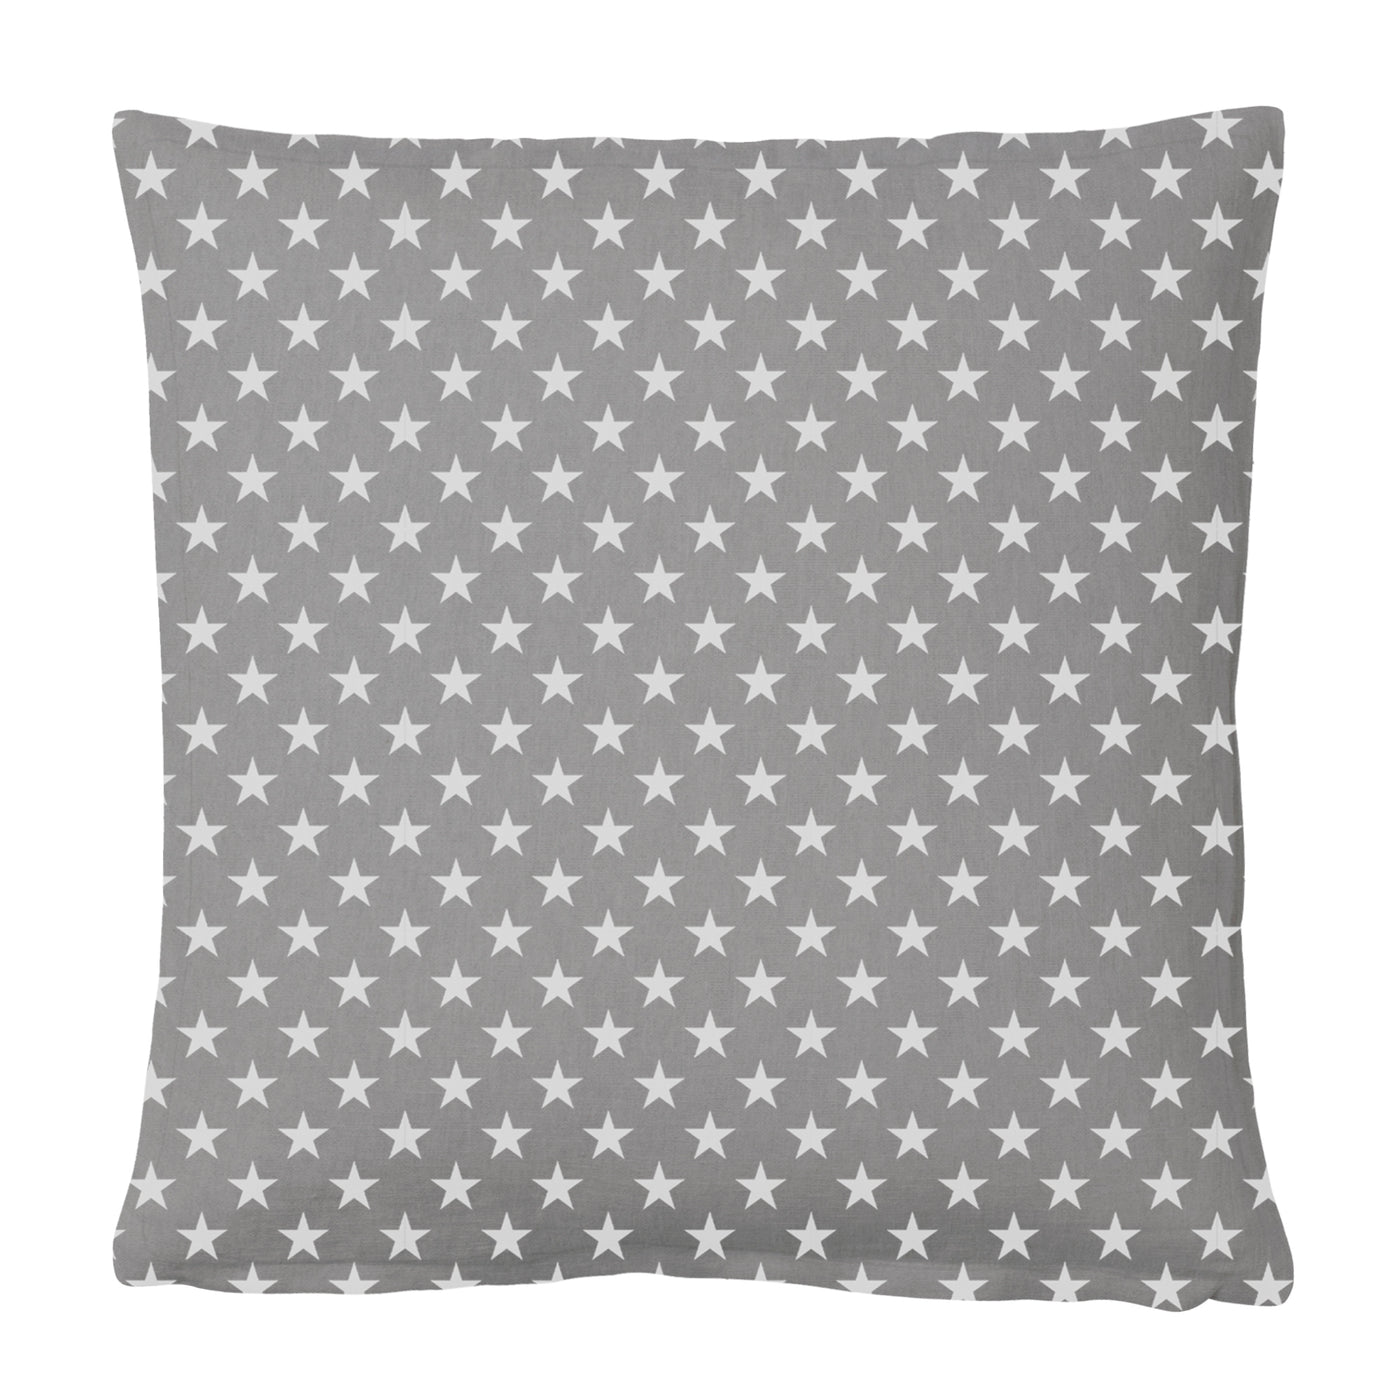 Stars gray pillow